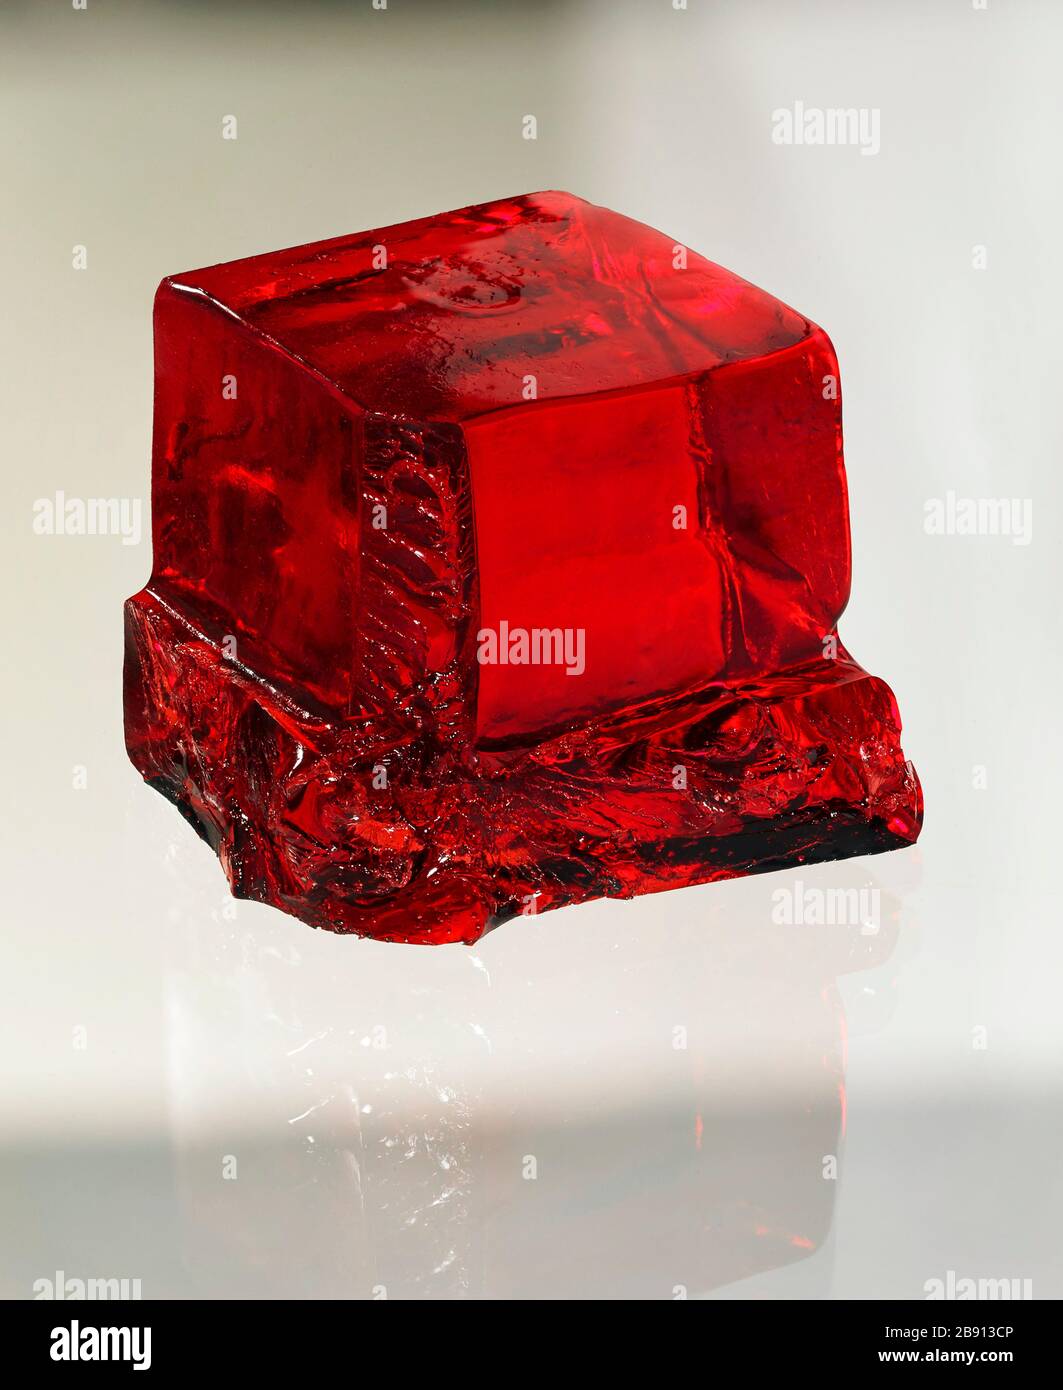 Cube of strawberry jelly Stock Photo